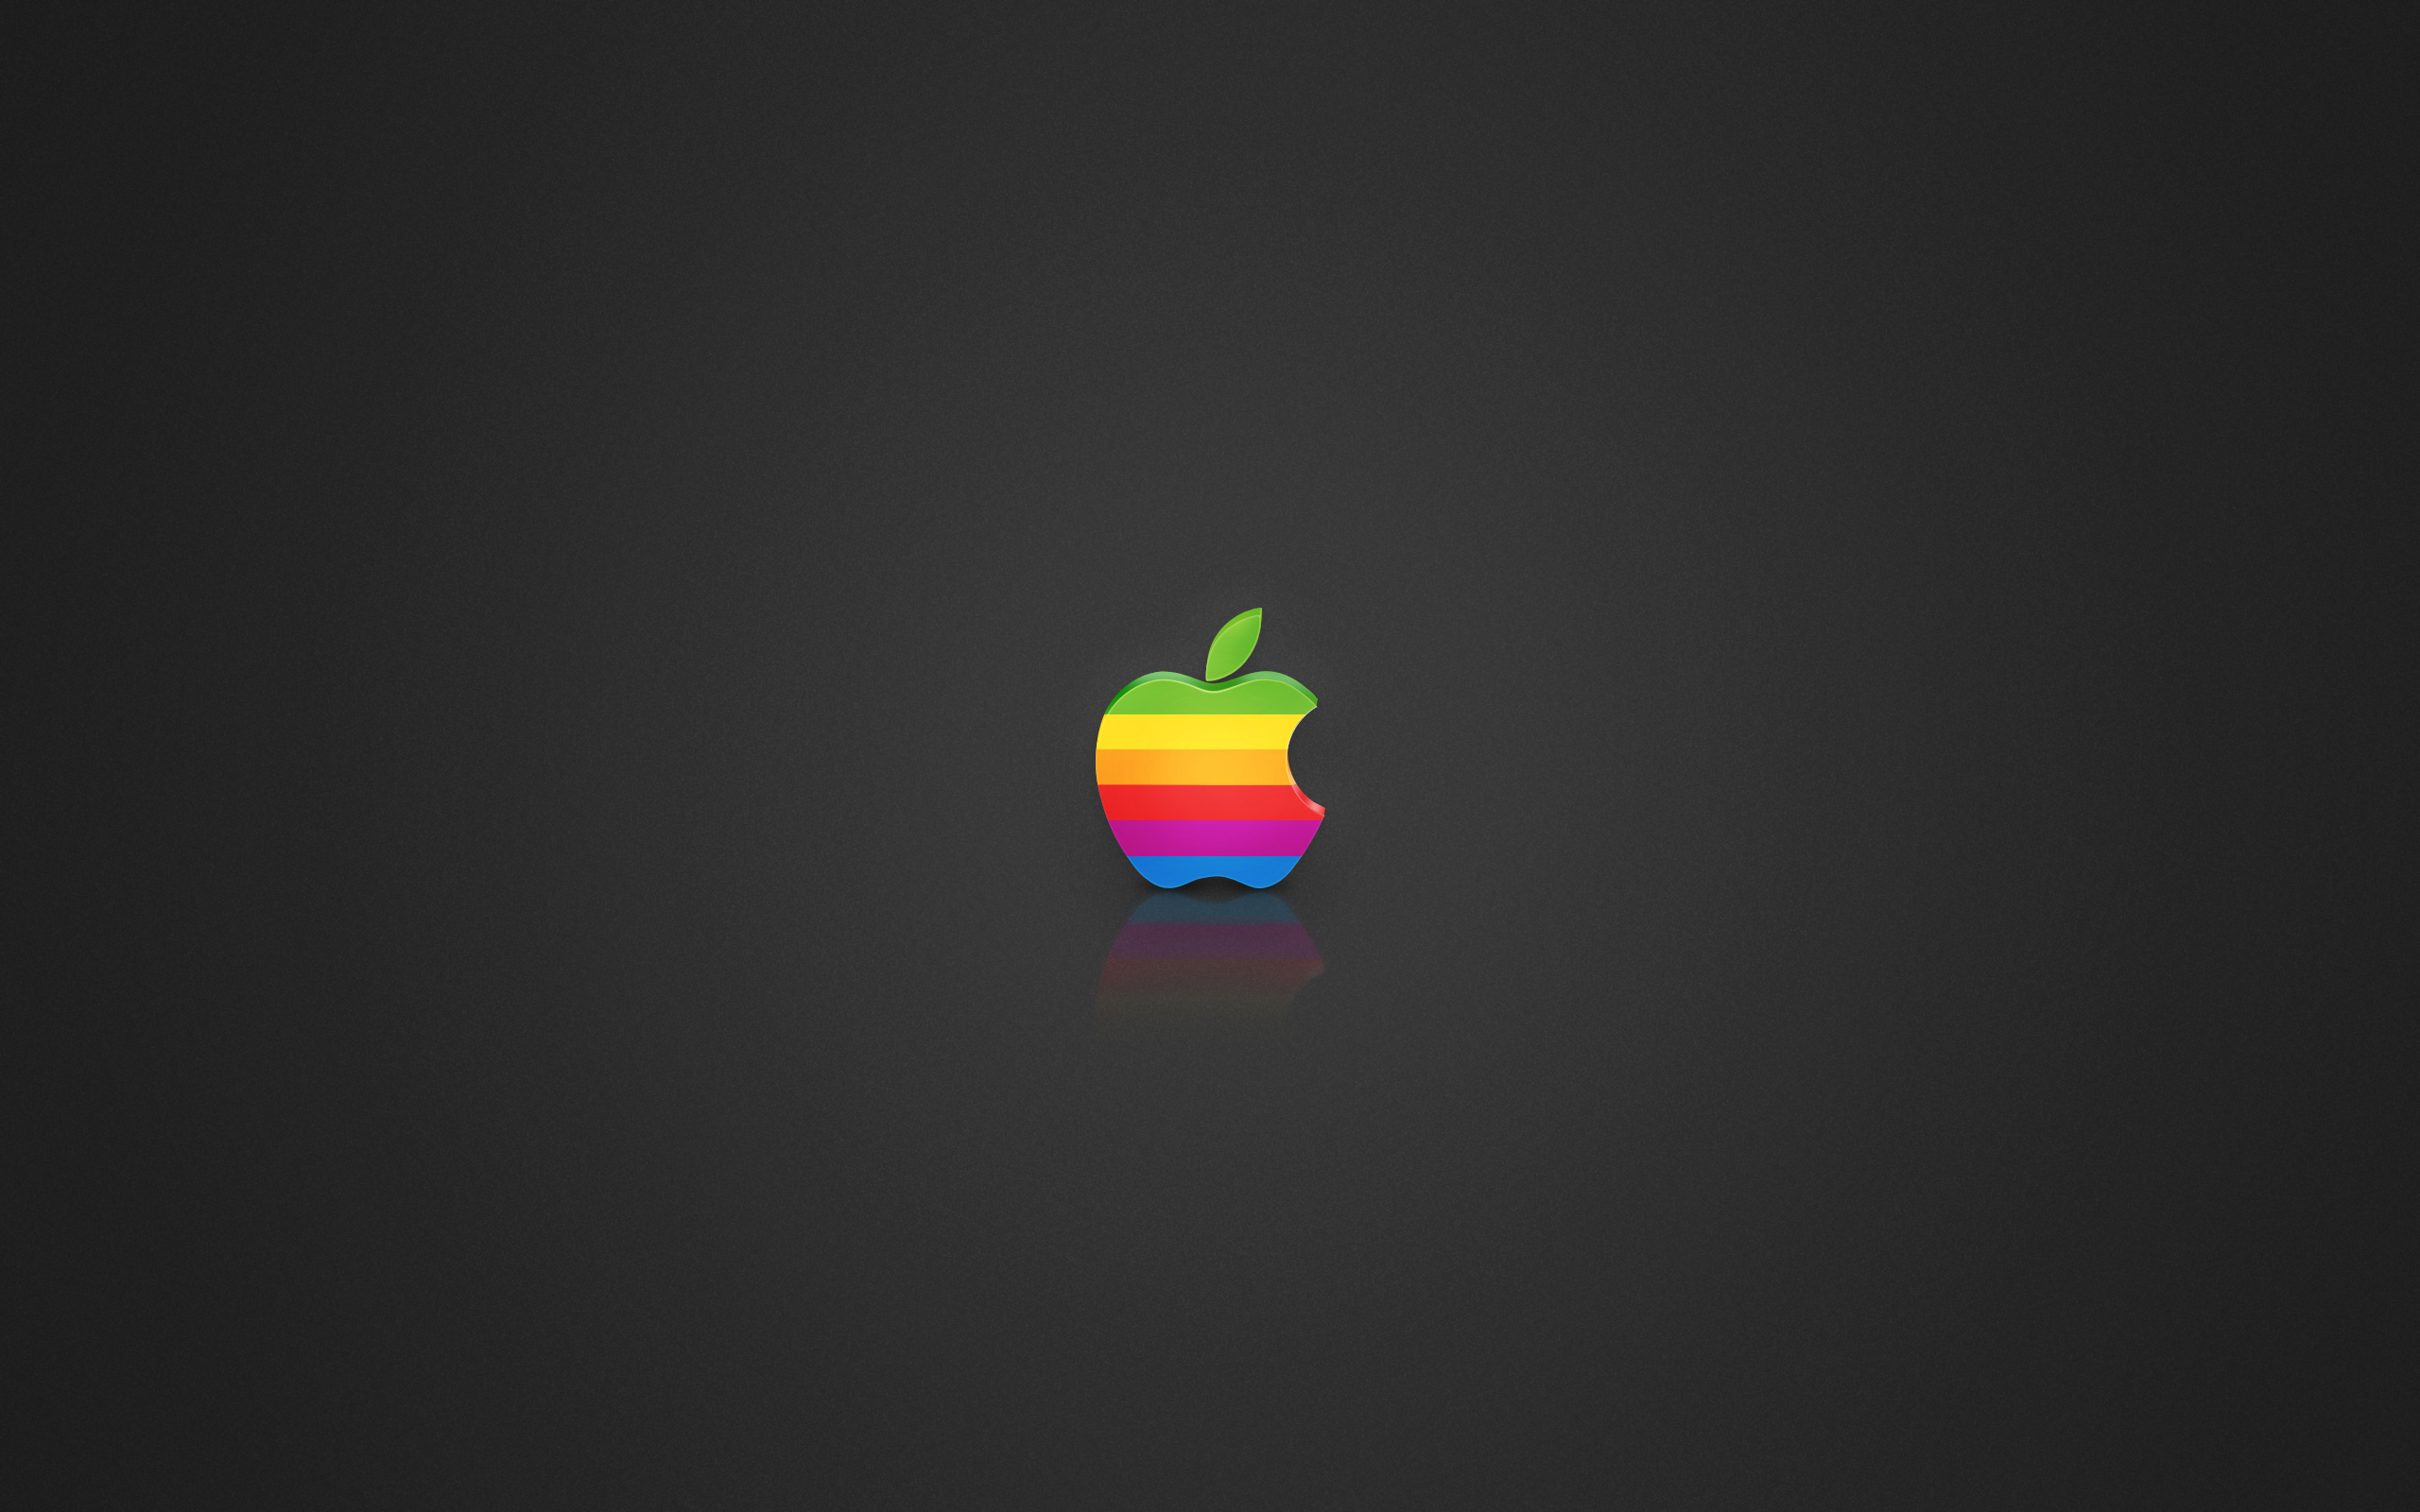 Coloured Apple logo wallpapers Coloured Apple logo stock